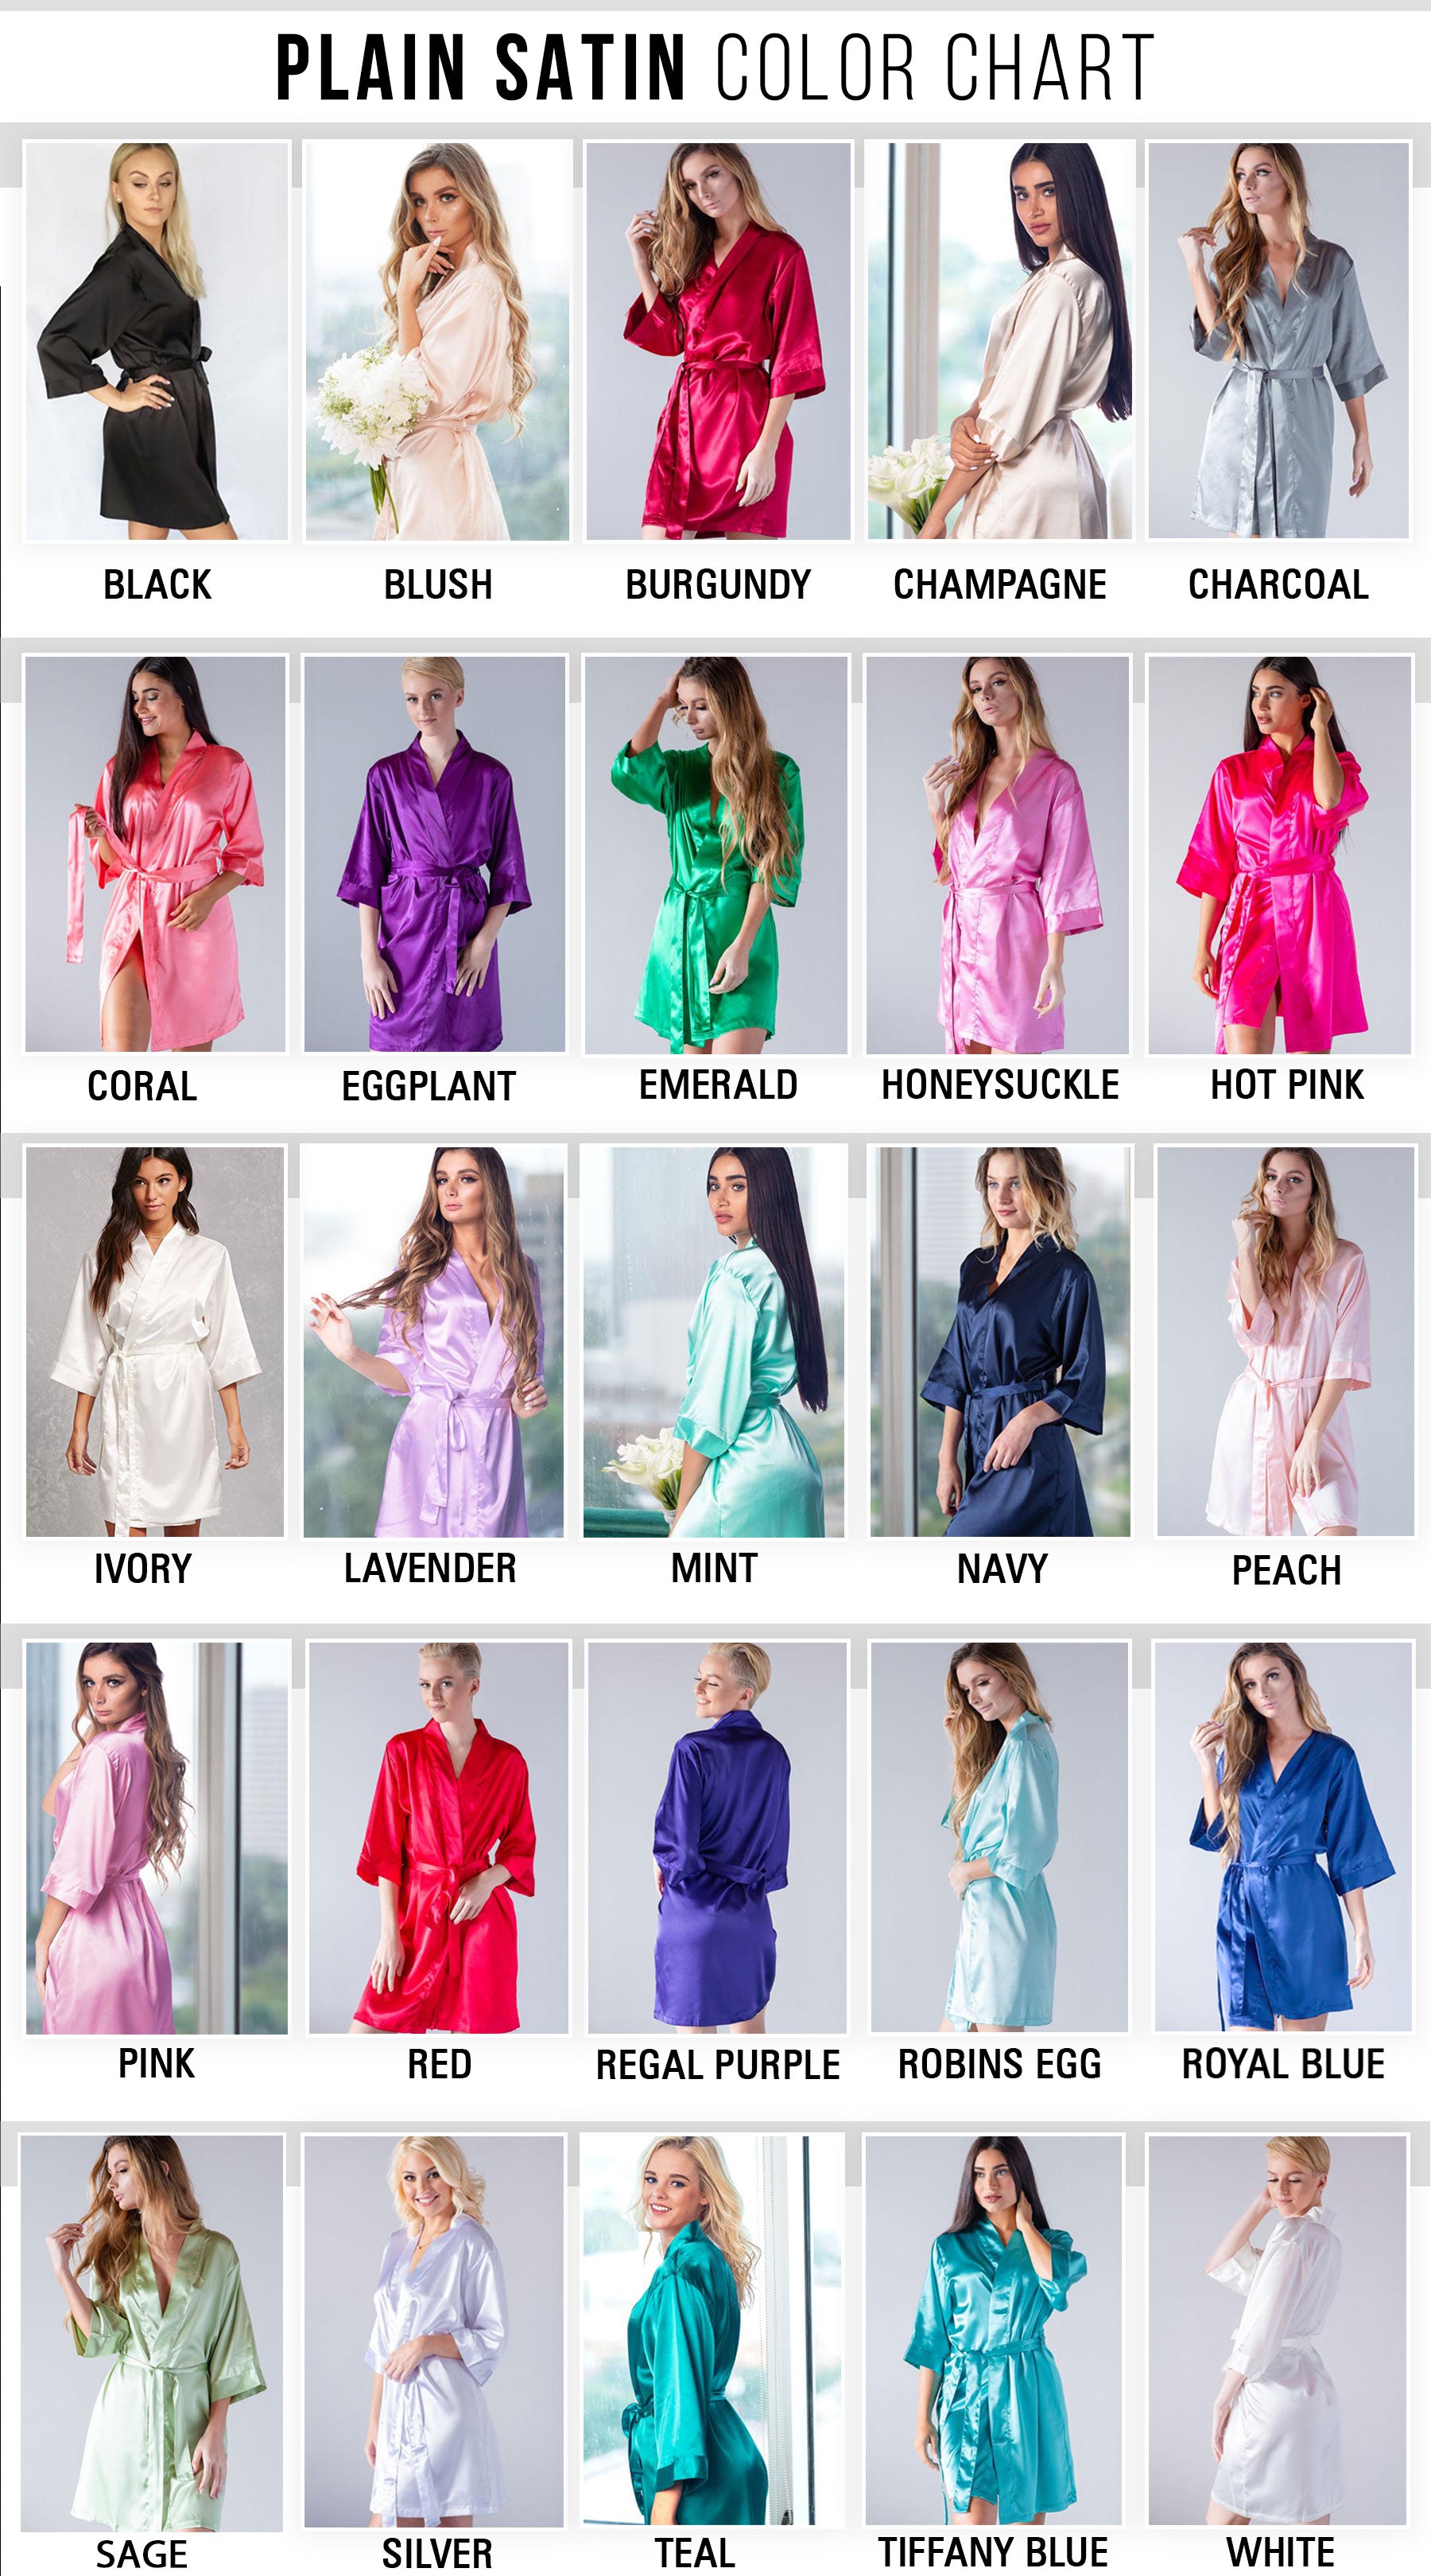 Plain Satin Robes Color Chart - Boss Bitch Robe - Fun & Trendy Wedding Day Robe - Satin Robe - Kimono Robe - Bridal Robe - Bridesmaid Robe - Wedding Robe - Wedding Gift - Bridal Gift - Bridesmaid Gift - Affordable Robe - PrettyRobes